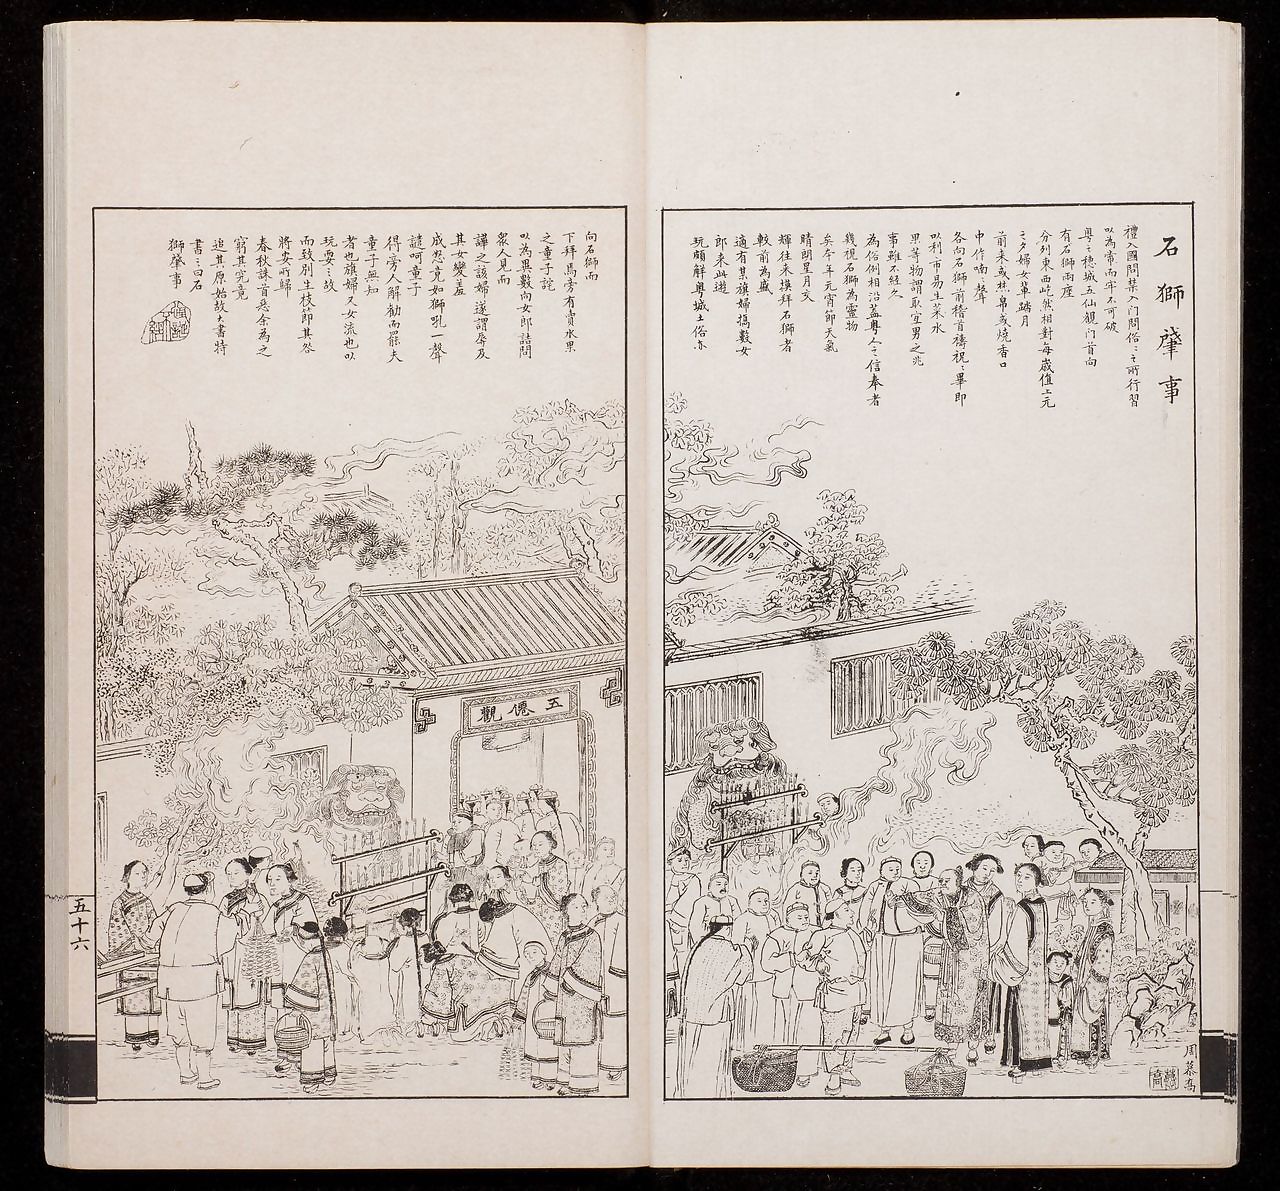 Dianshizhai Photographic Vol.3 - 点石斋画报 第三集 - attaching 4